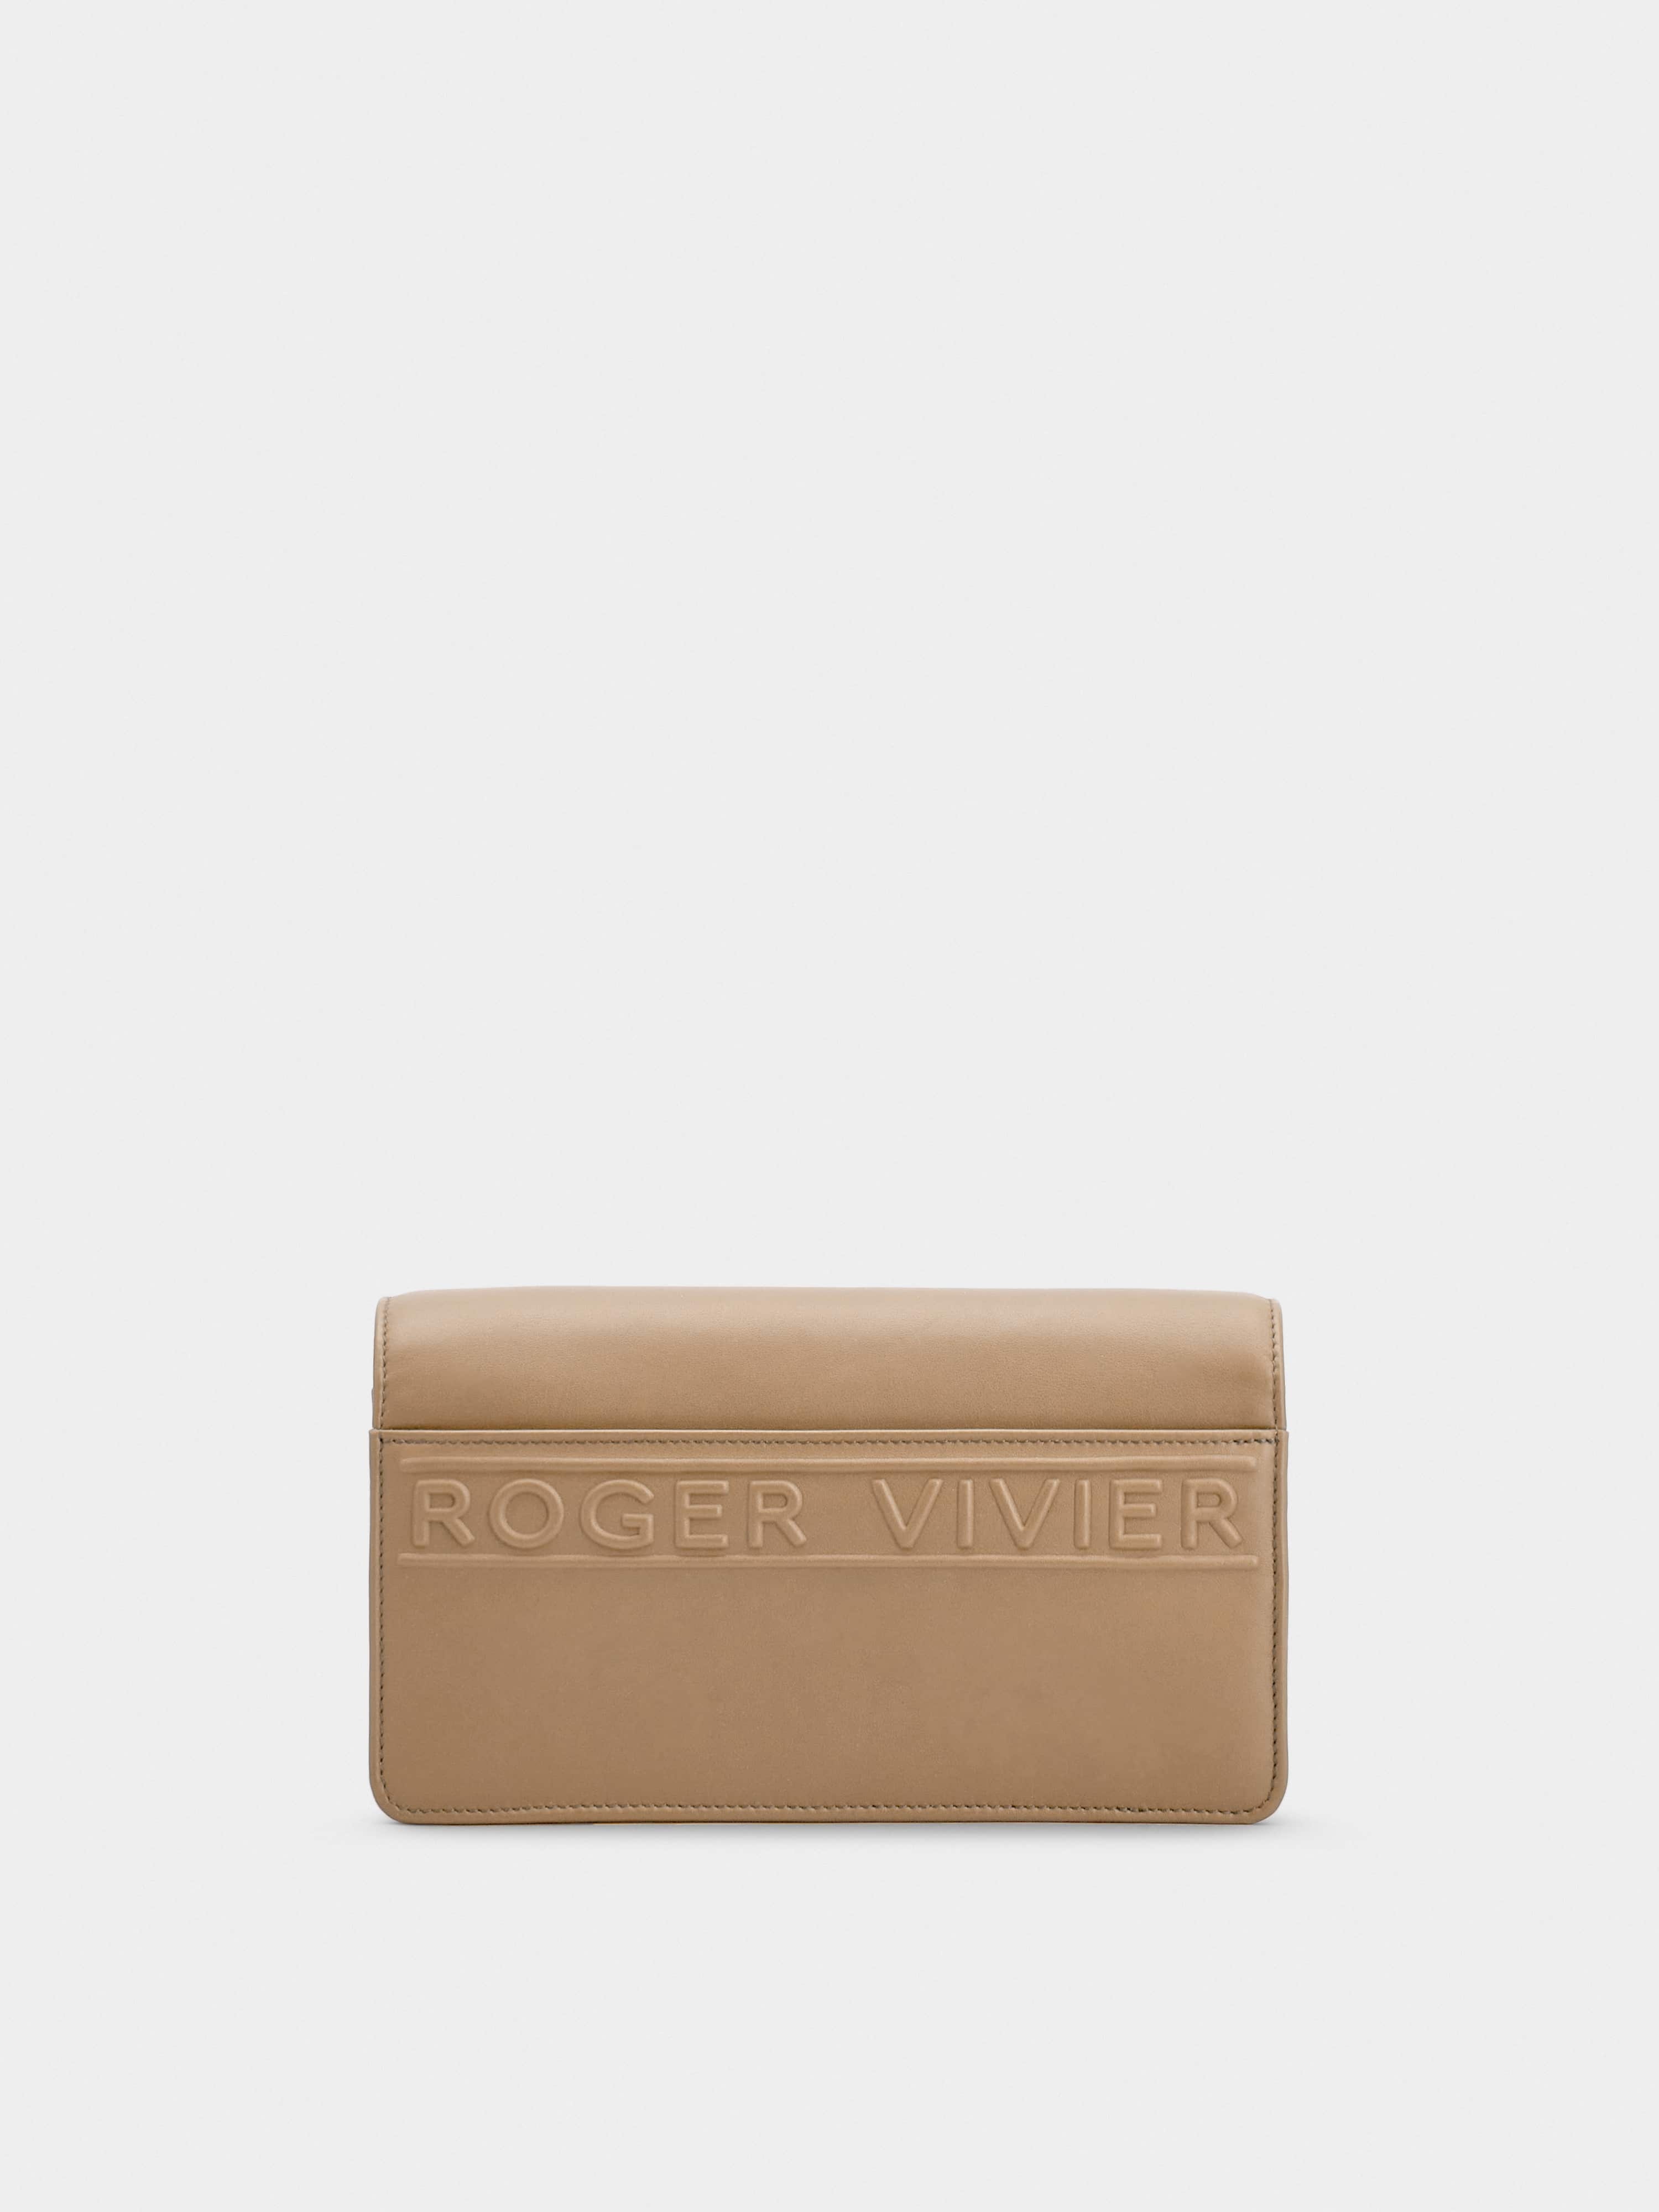 Viv' Choc Mini Bag in Leather - 5